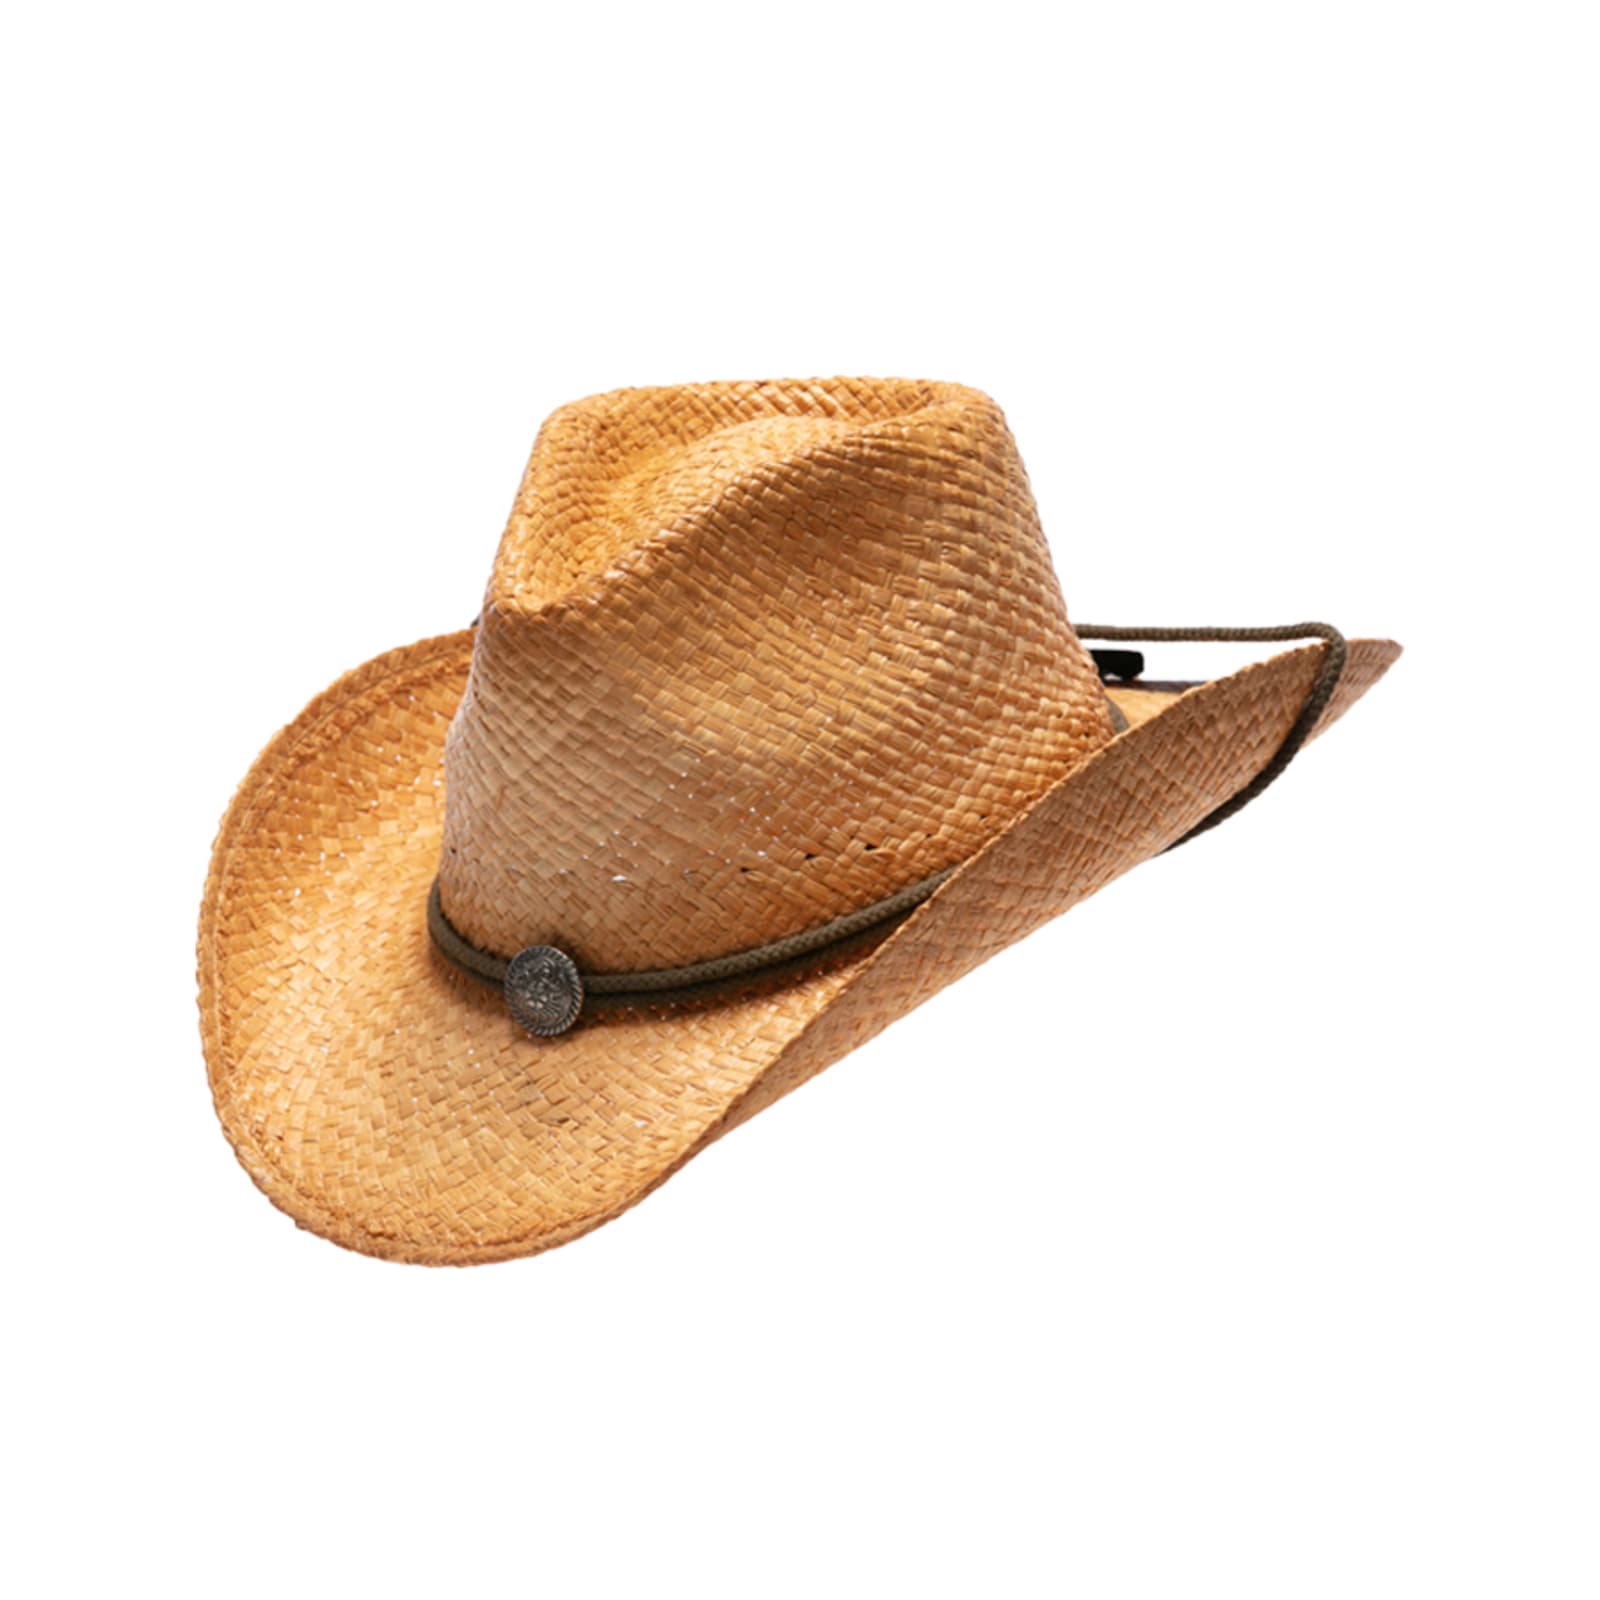 Adult Tuscola Western Straw Hiker Hat by Henschel at Fleet Farm